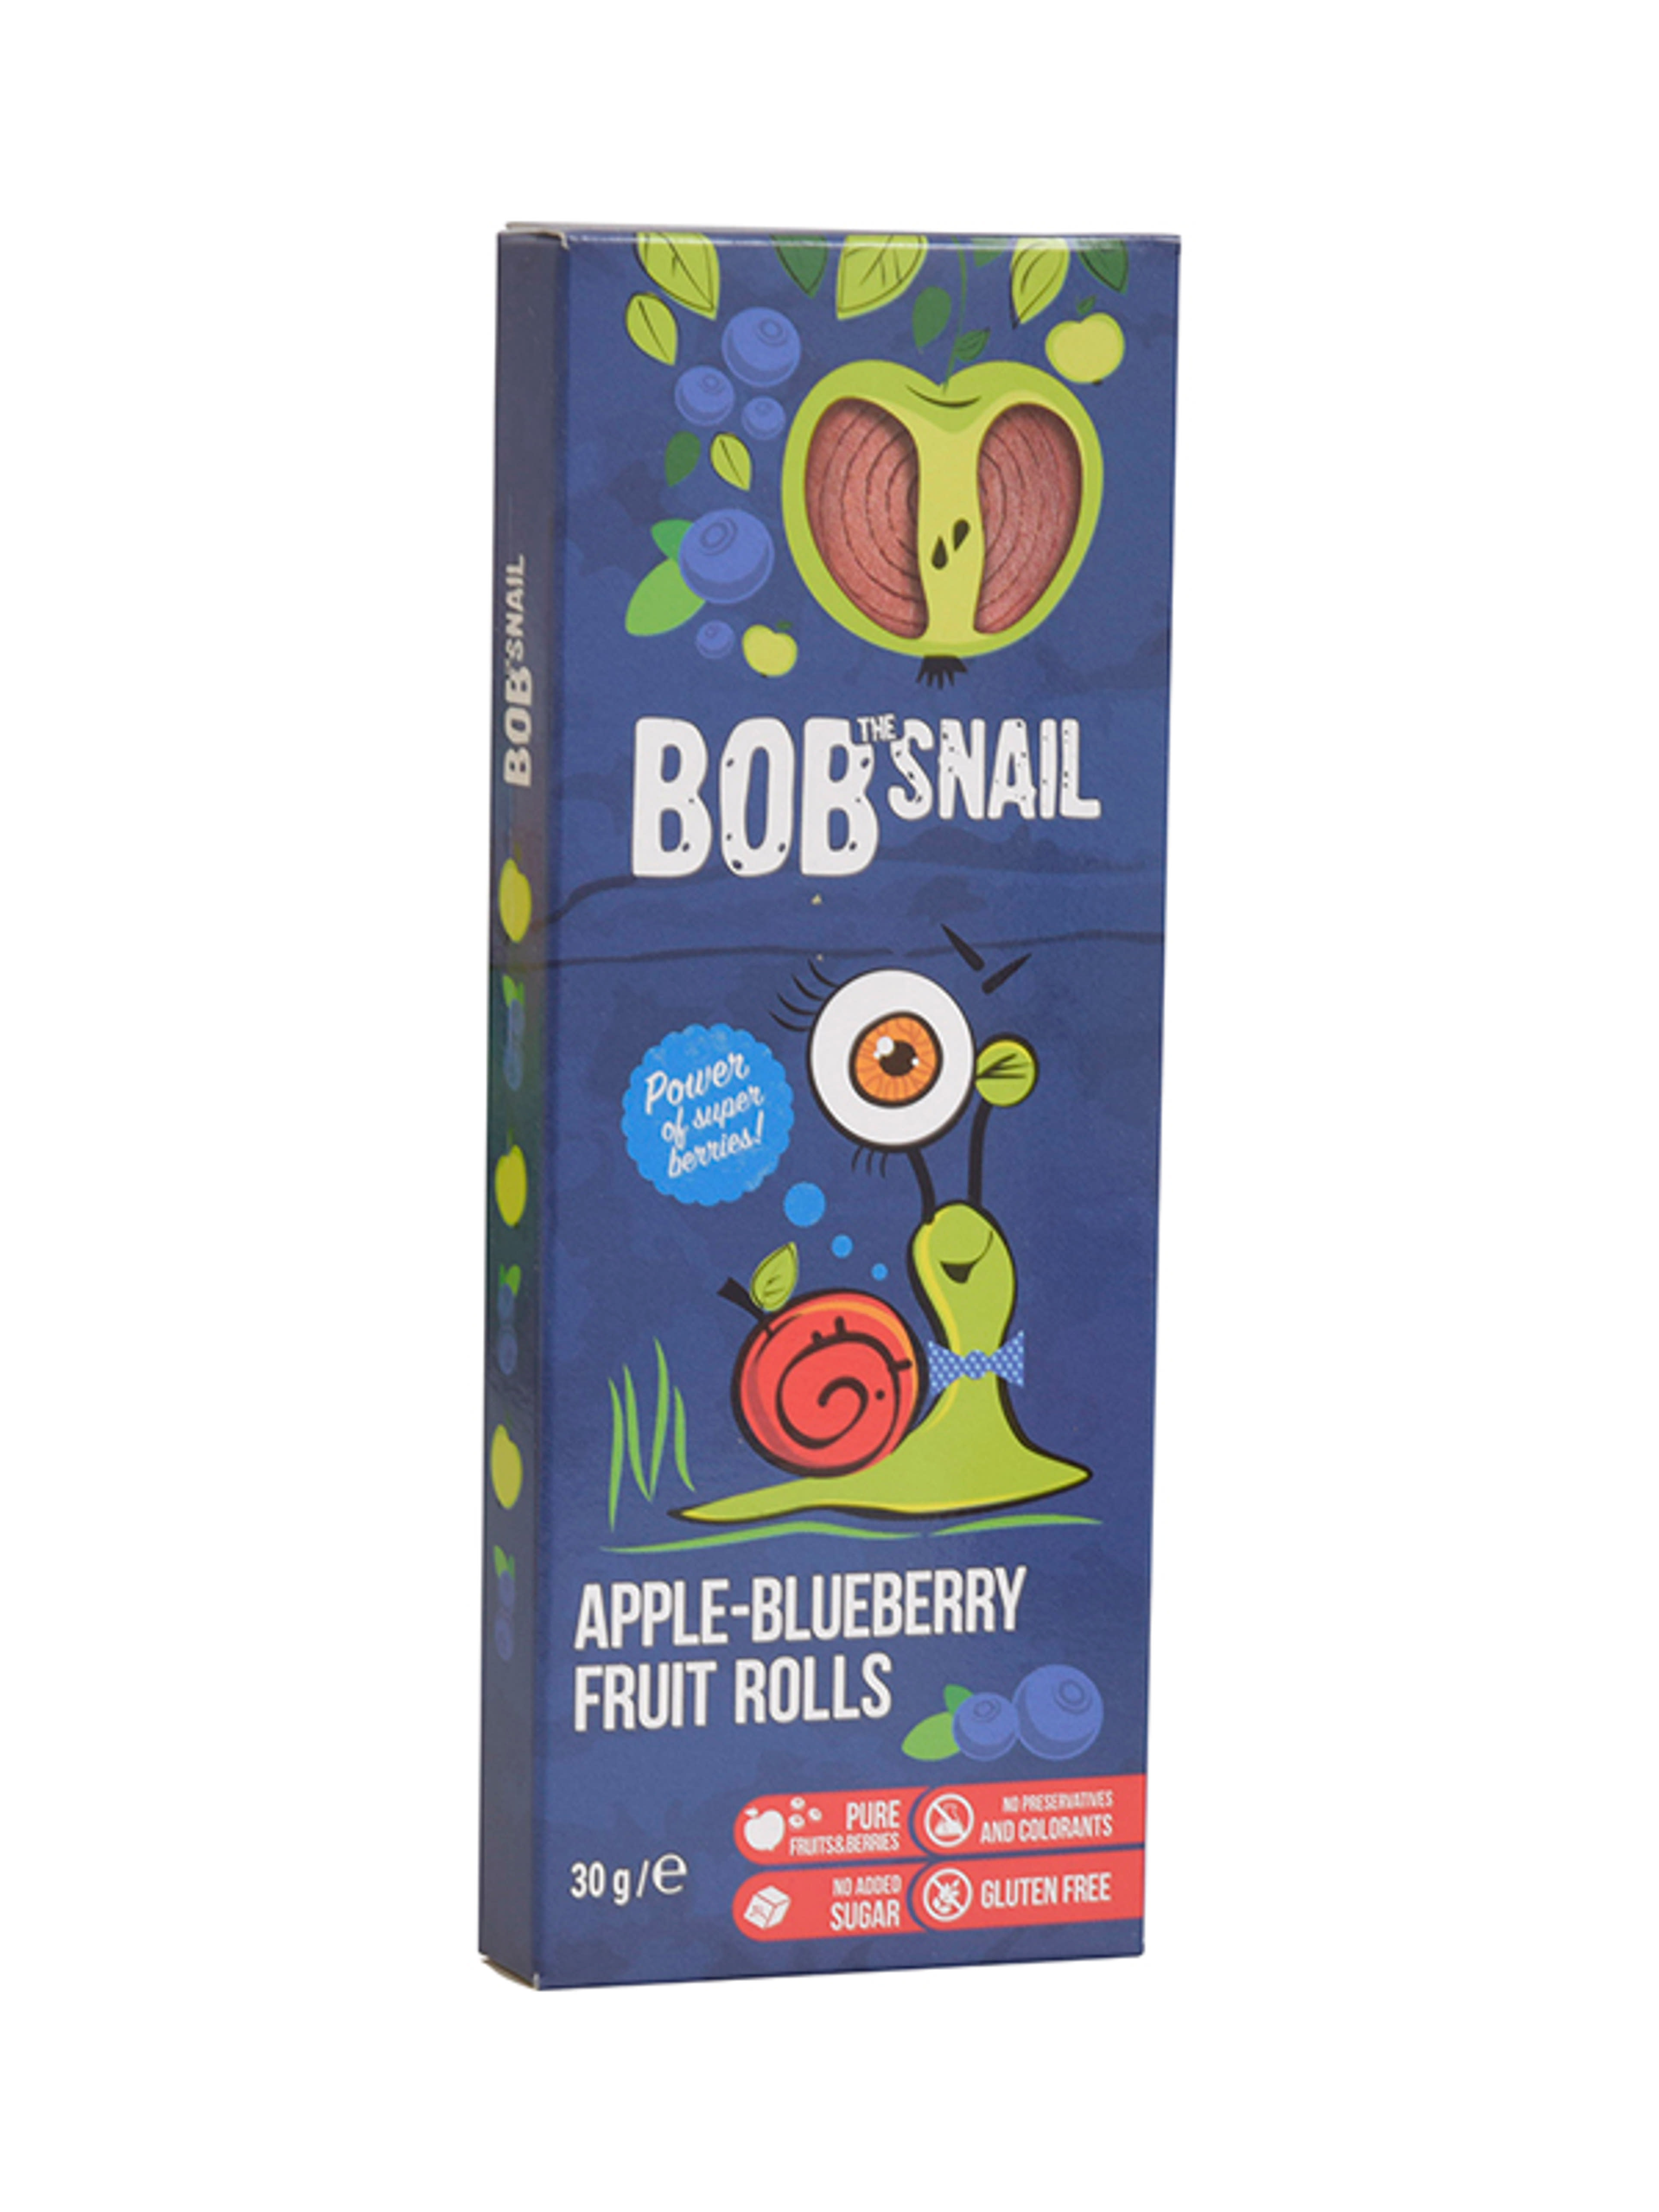 Bob Snail alma-áfonya rolls - 30 g